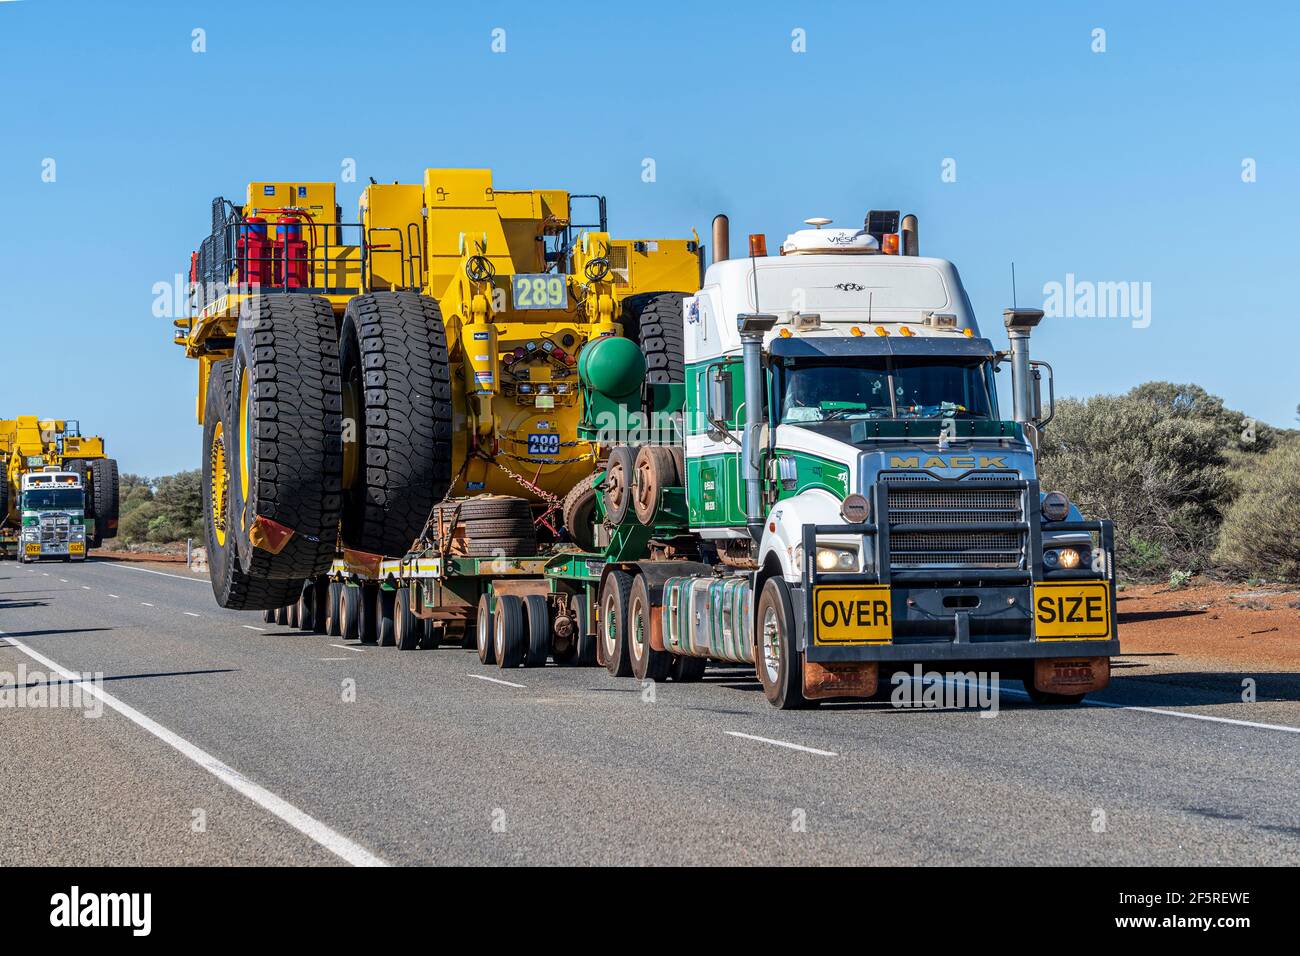 Macchine pesanti per miniera trasportate su autocarri ferroviari, Australia occidentale Foto Stock